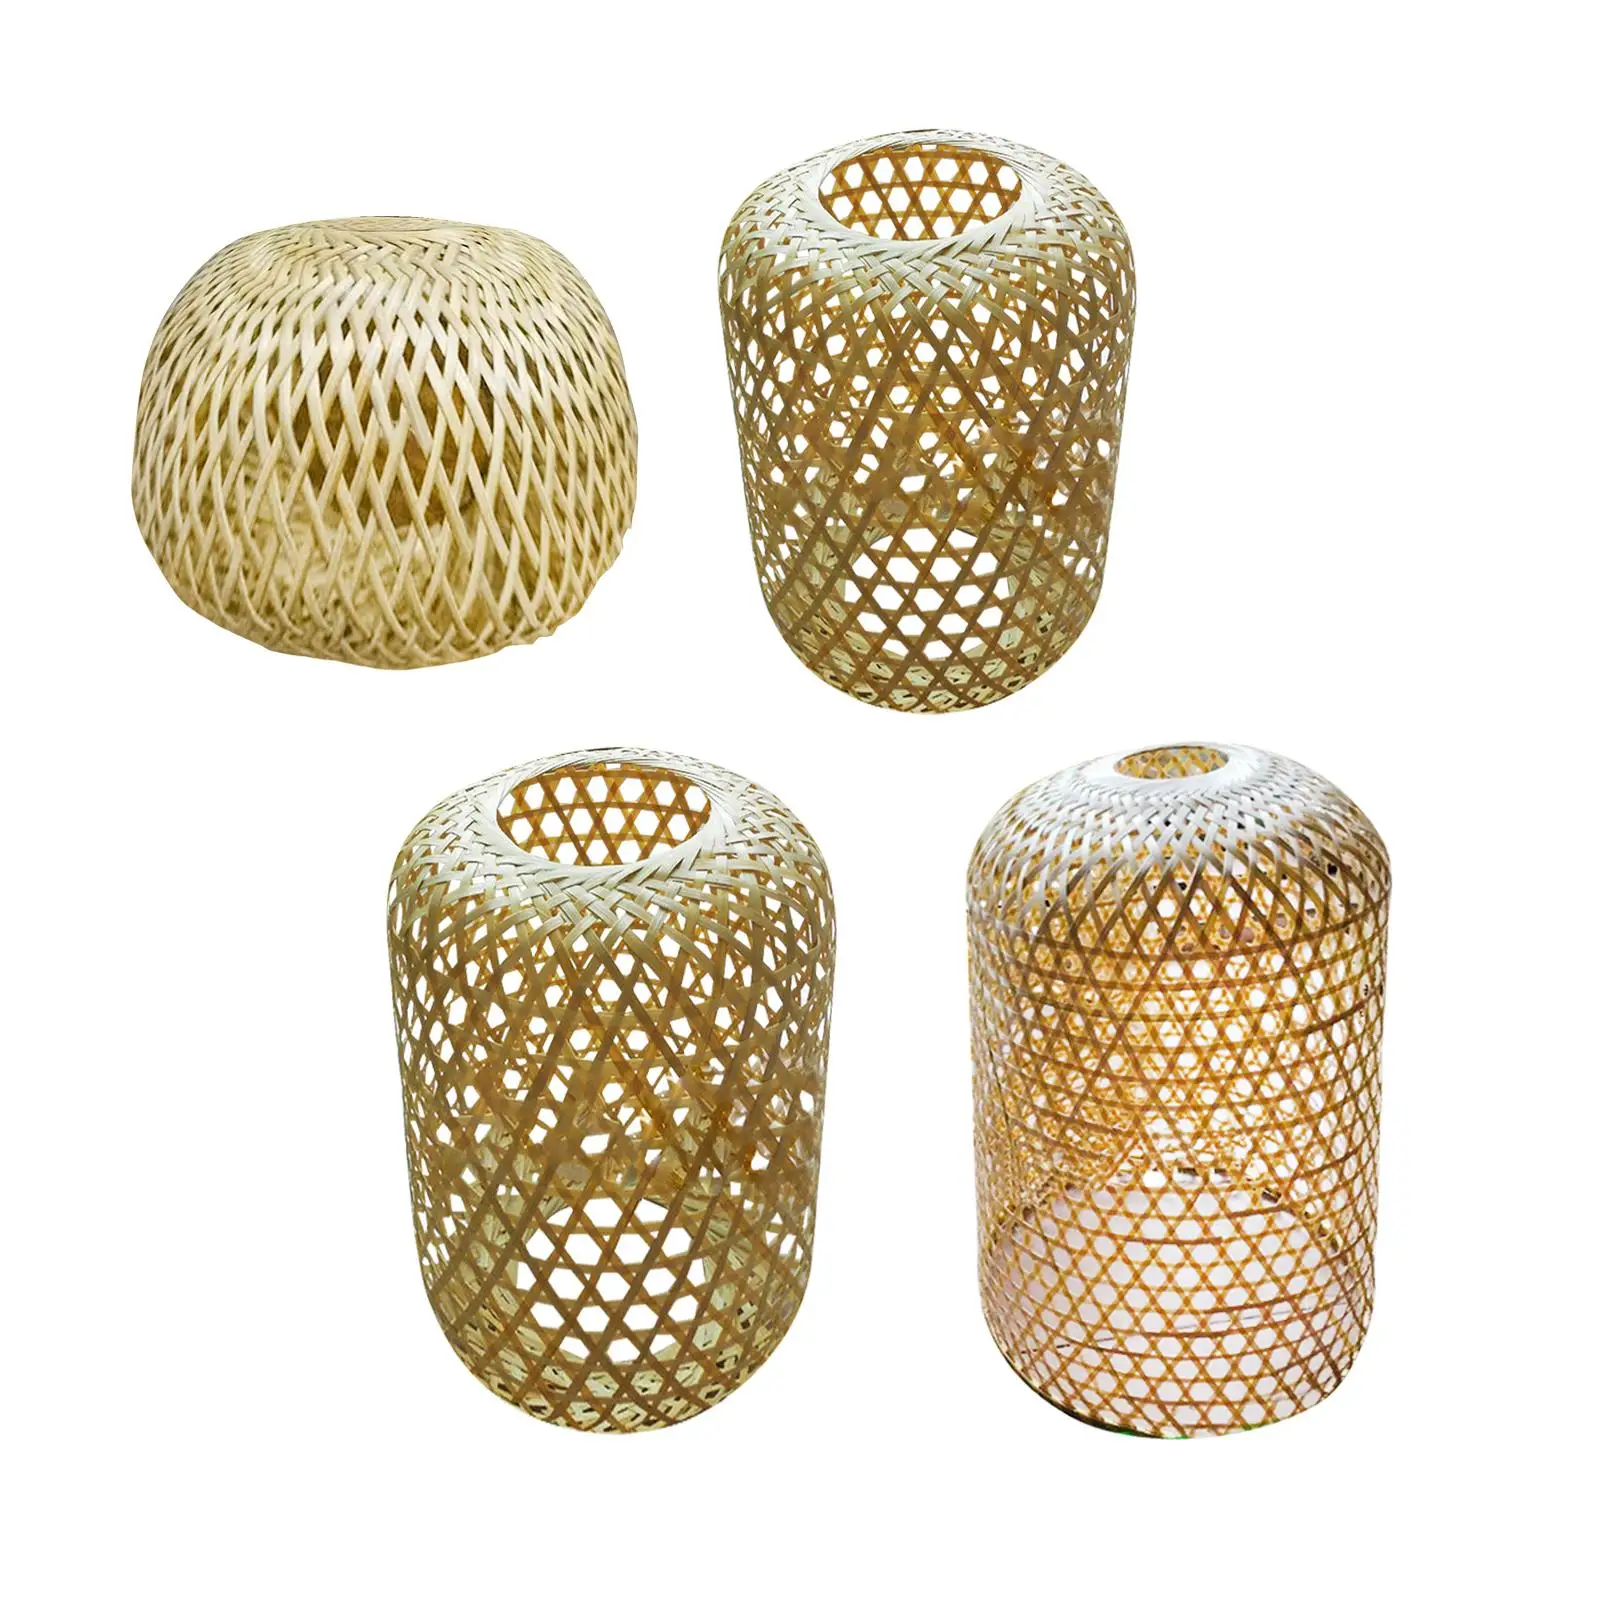 Weaving Bamboo Lamp Shade Crafts Decorative Lantern Ornament Lampshade Lamp Accessory for Hotel Cafe Farm Decor